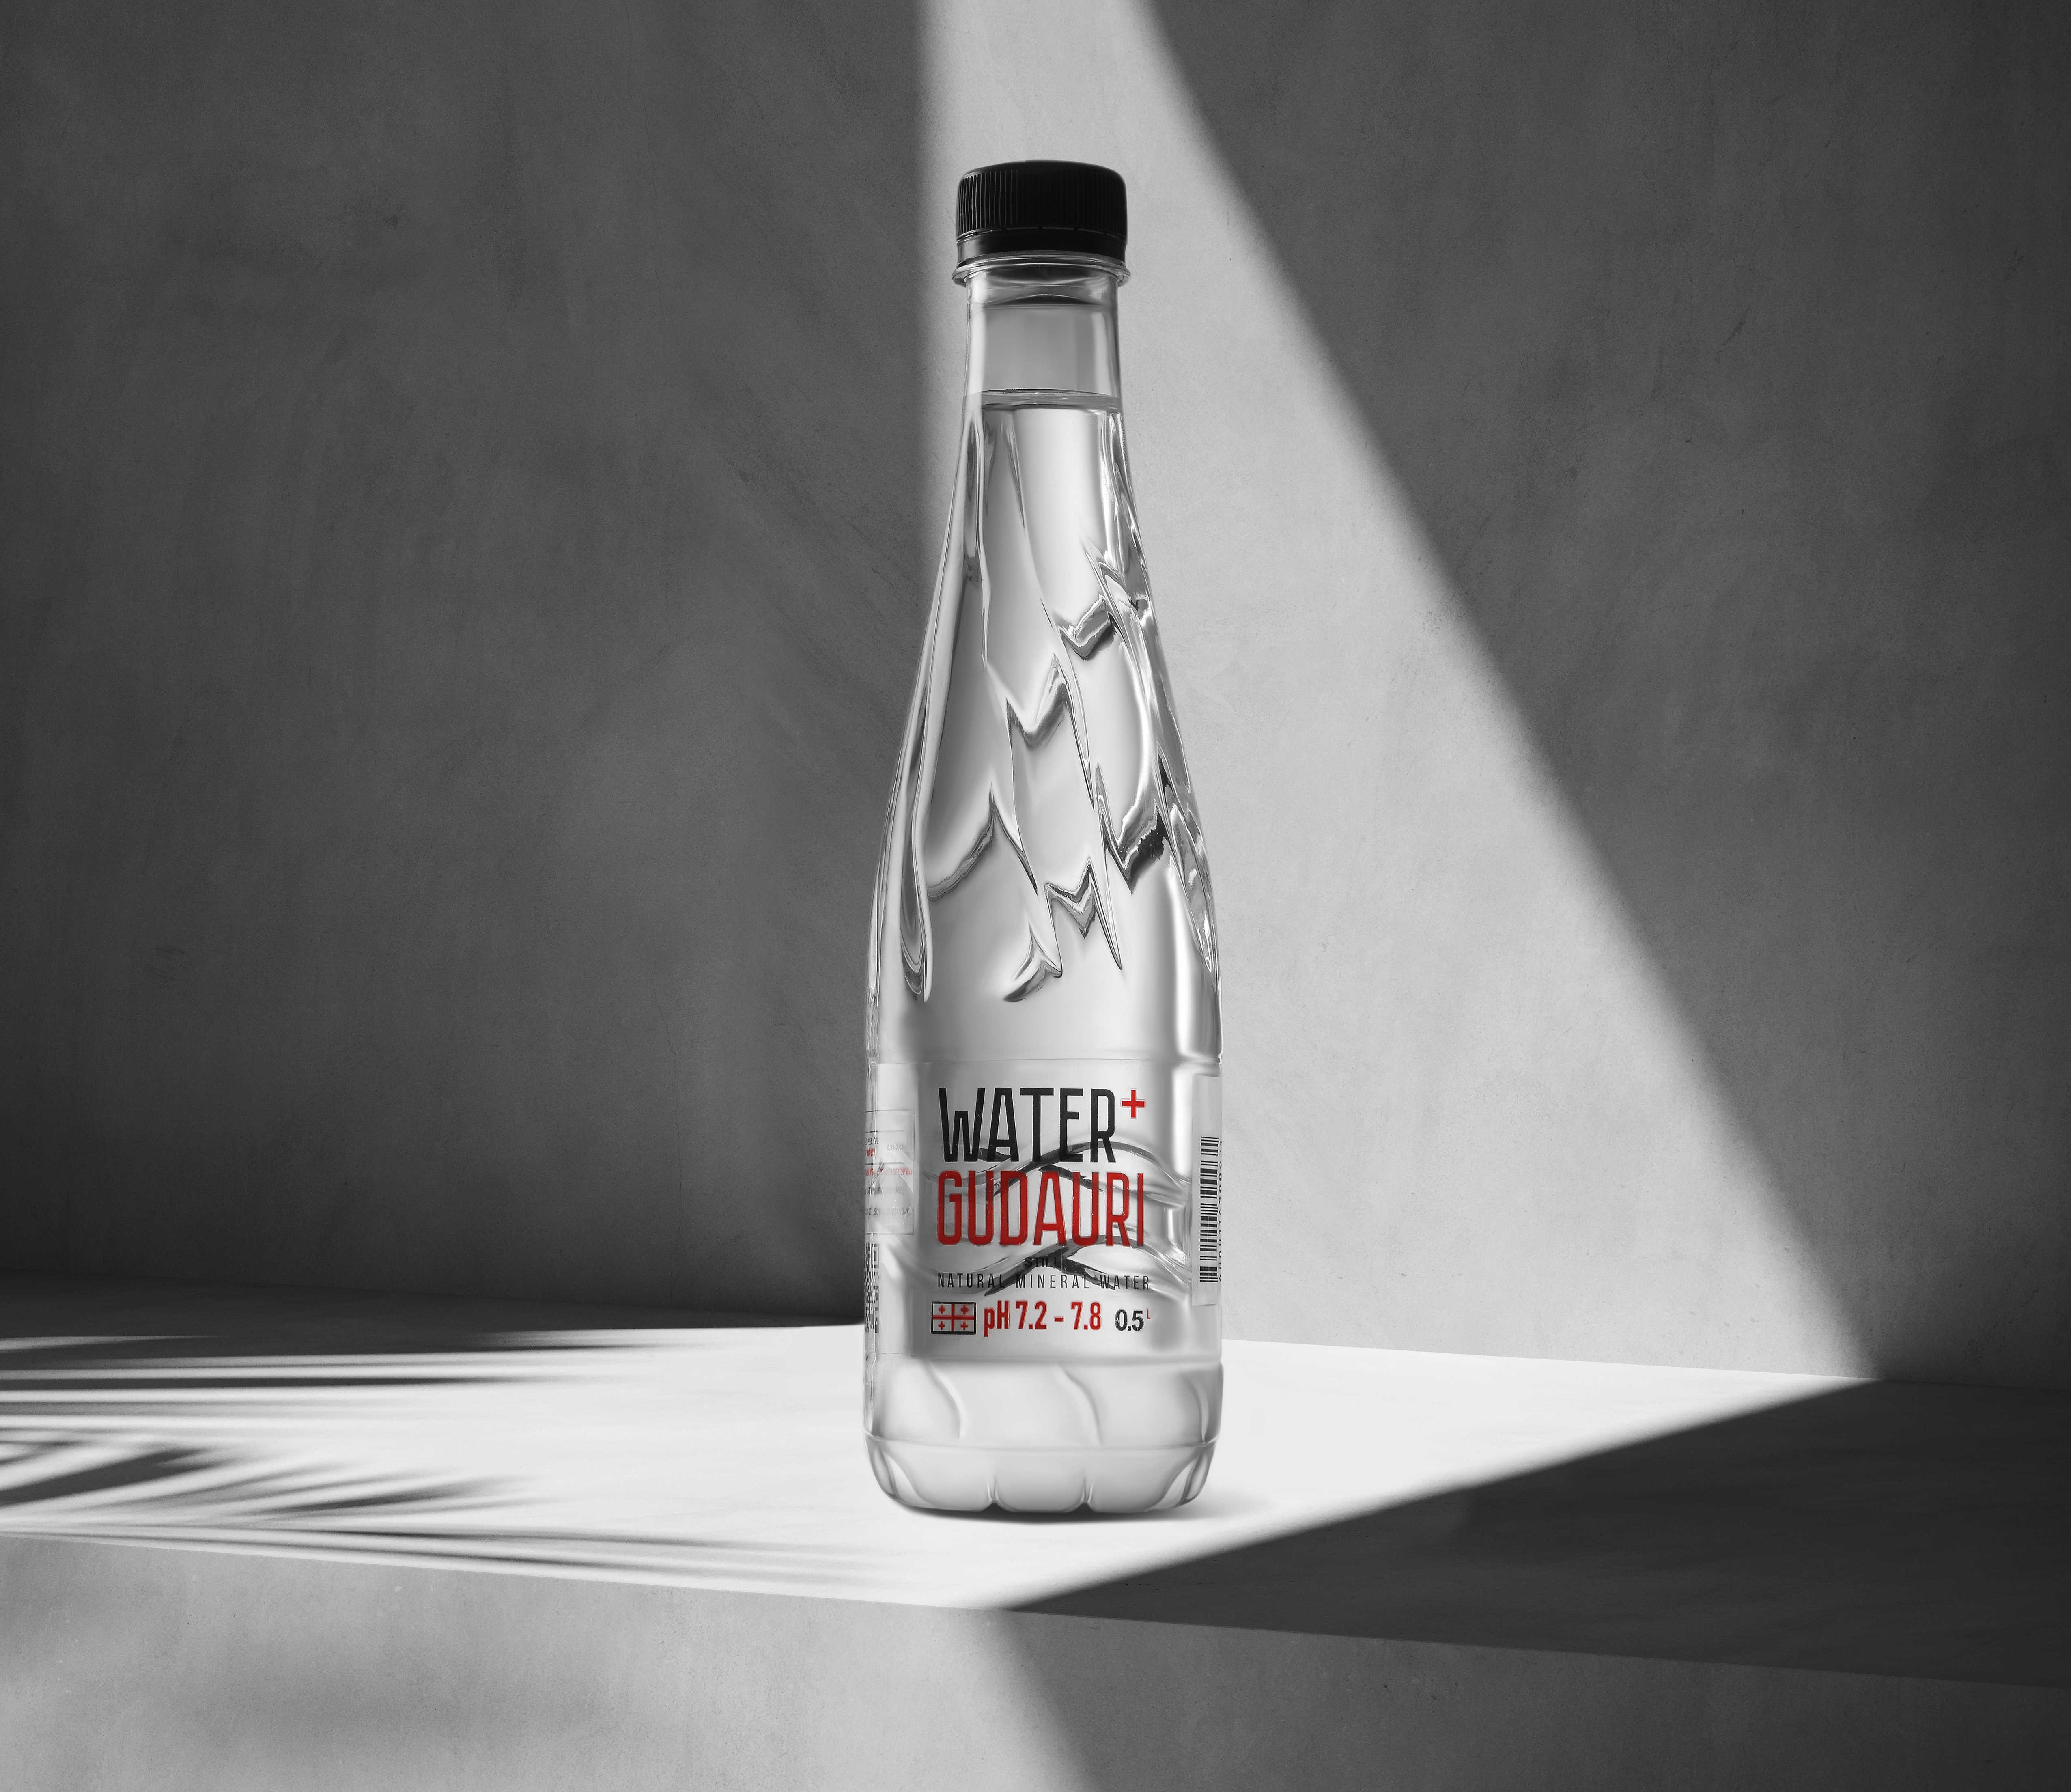 Branding of Water Gudauri Reflects the Spirit of Georgia